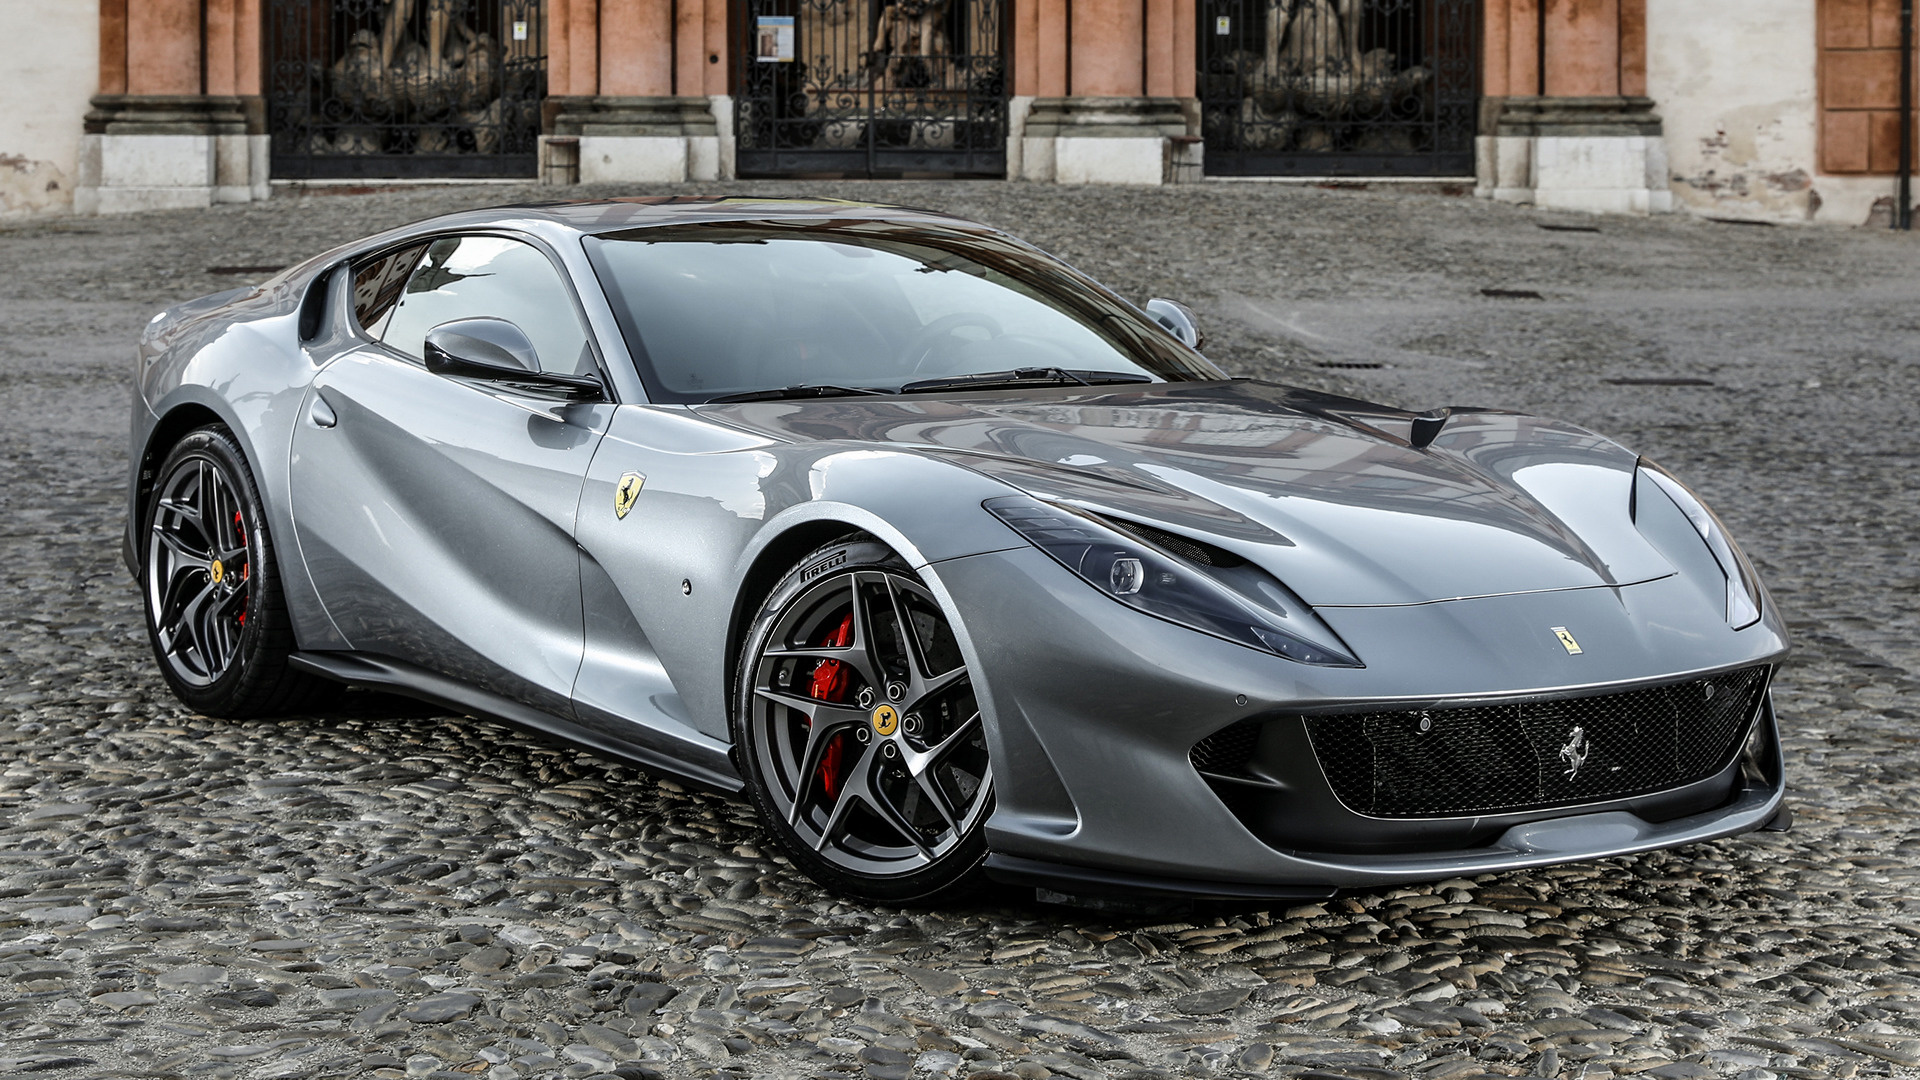 Ferrari Superfast Wallpaper And HD Image Car Pixel